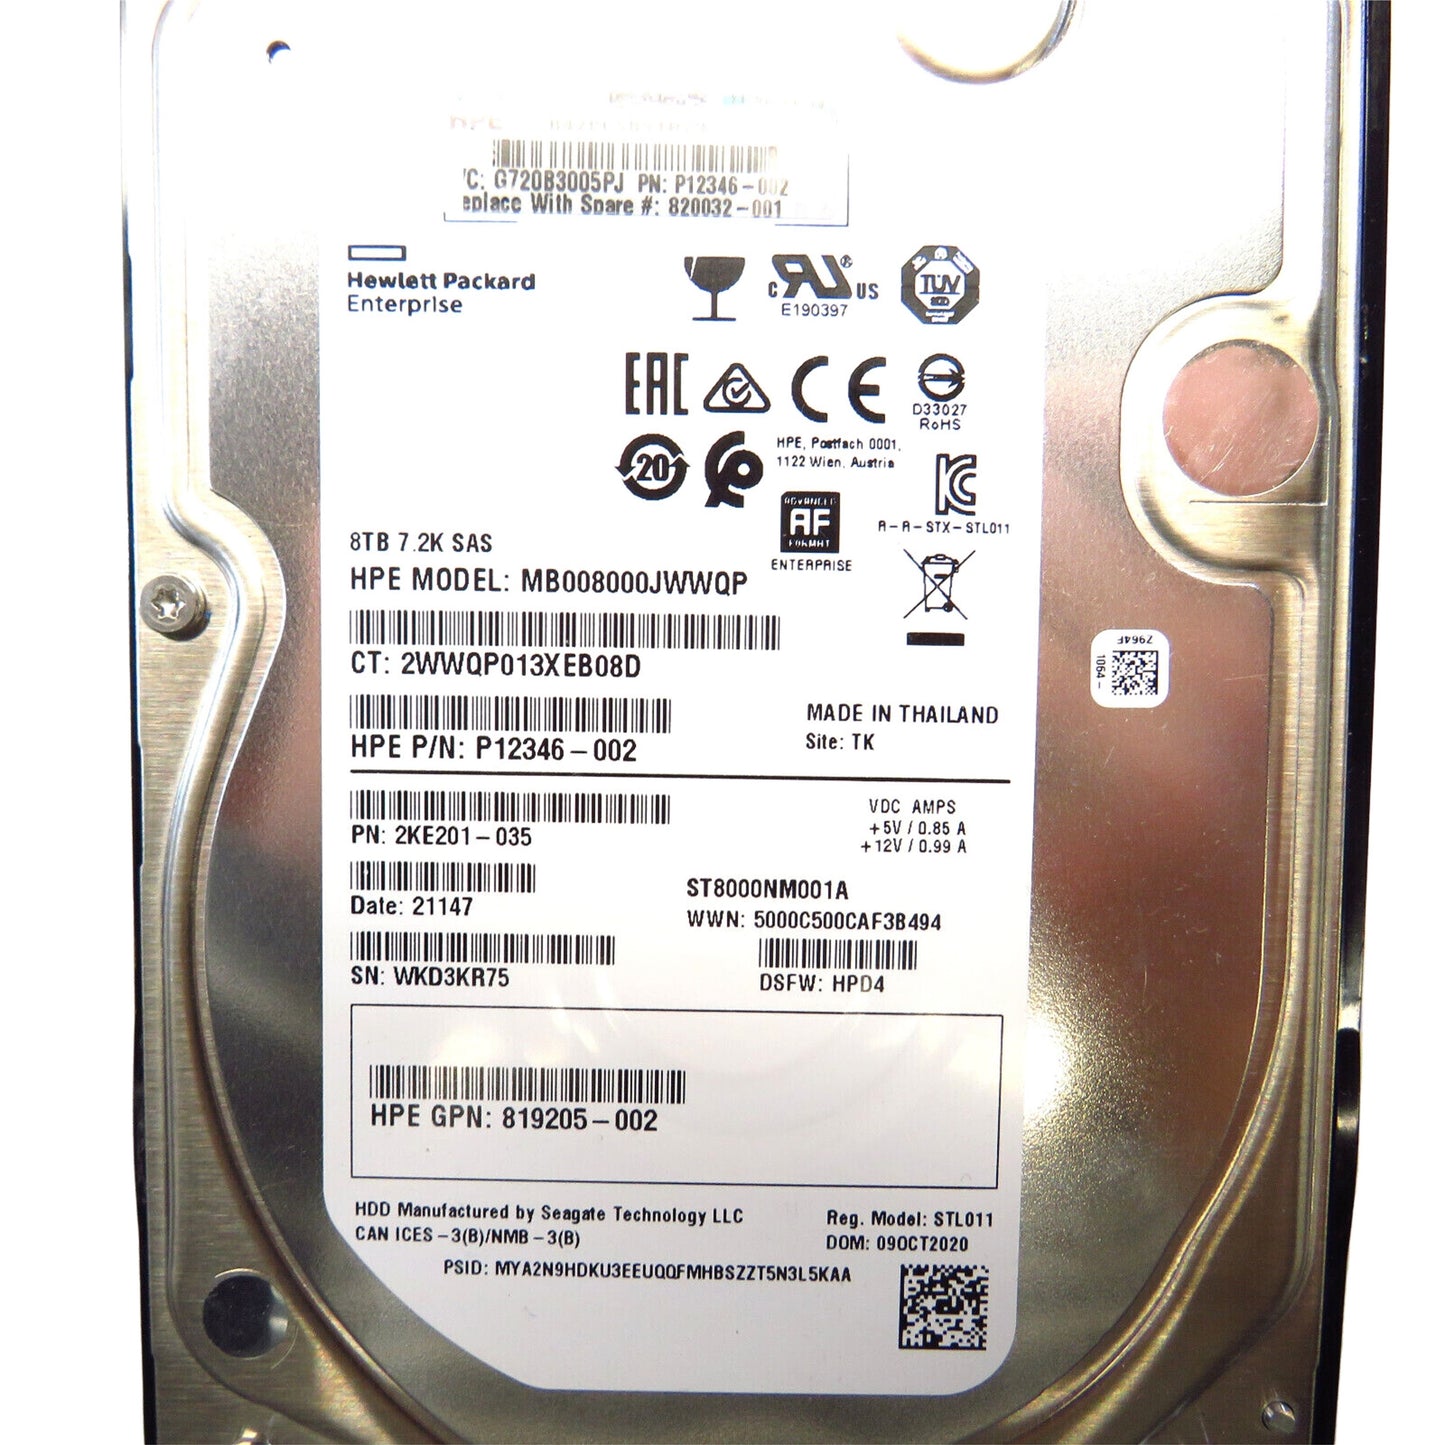 HP 820032-001 3.5" 8TB 7200RPM SAS 12Gb/s Hard Disk Drive (HDD), Silver (Refurbished)